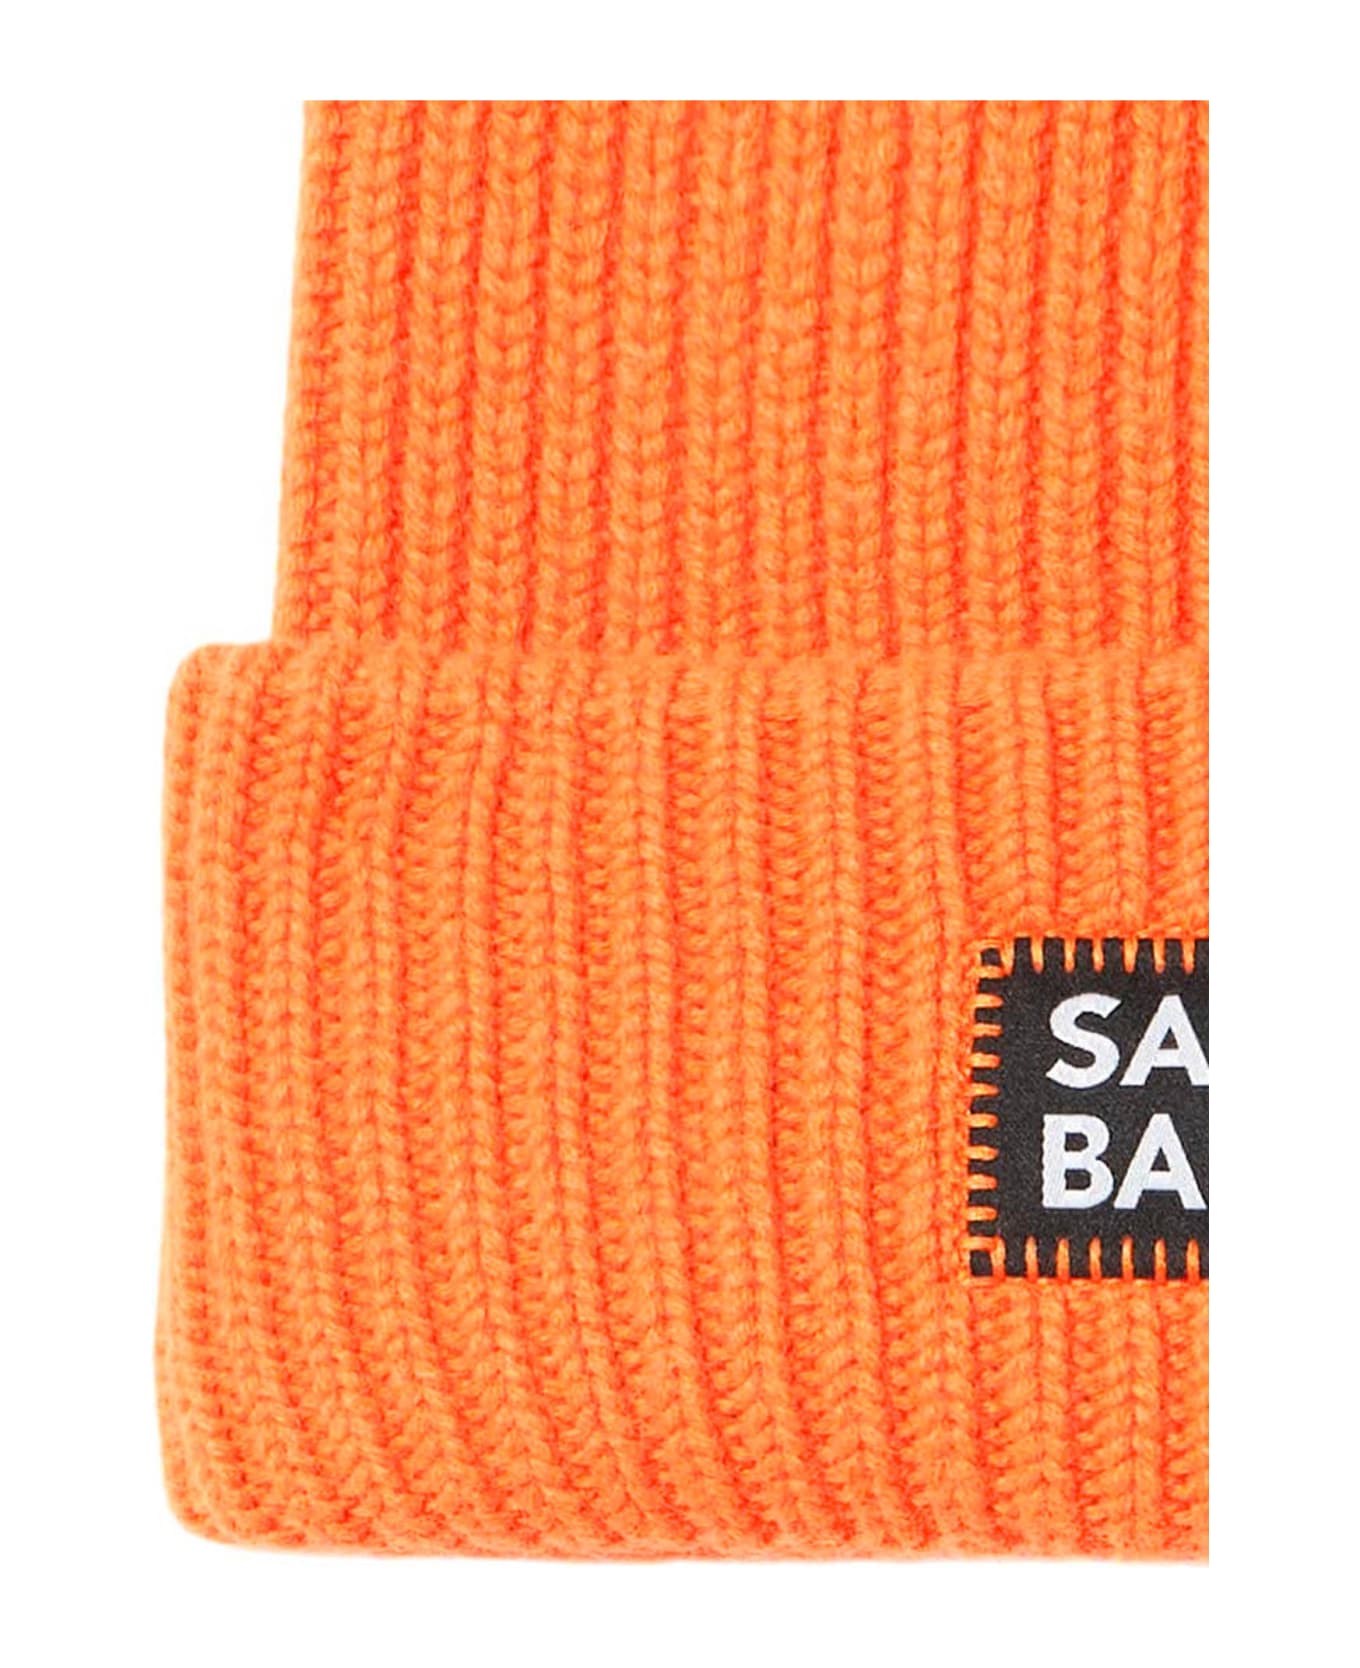 MC2 Saint Barth Man Fluo Orange Knit Beanie - ORANGE